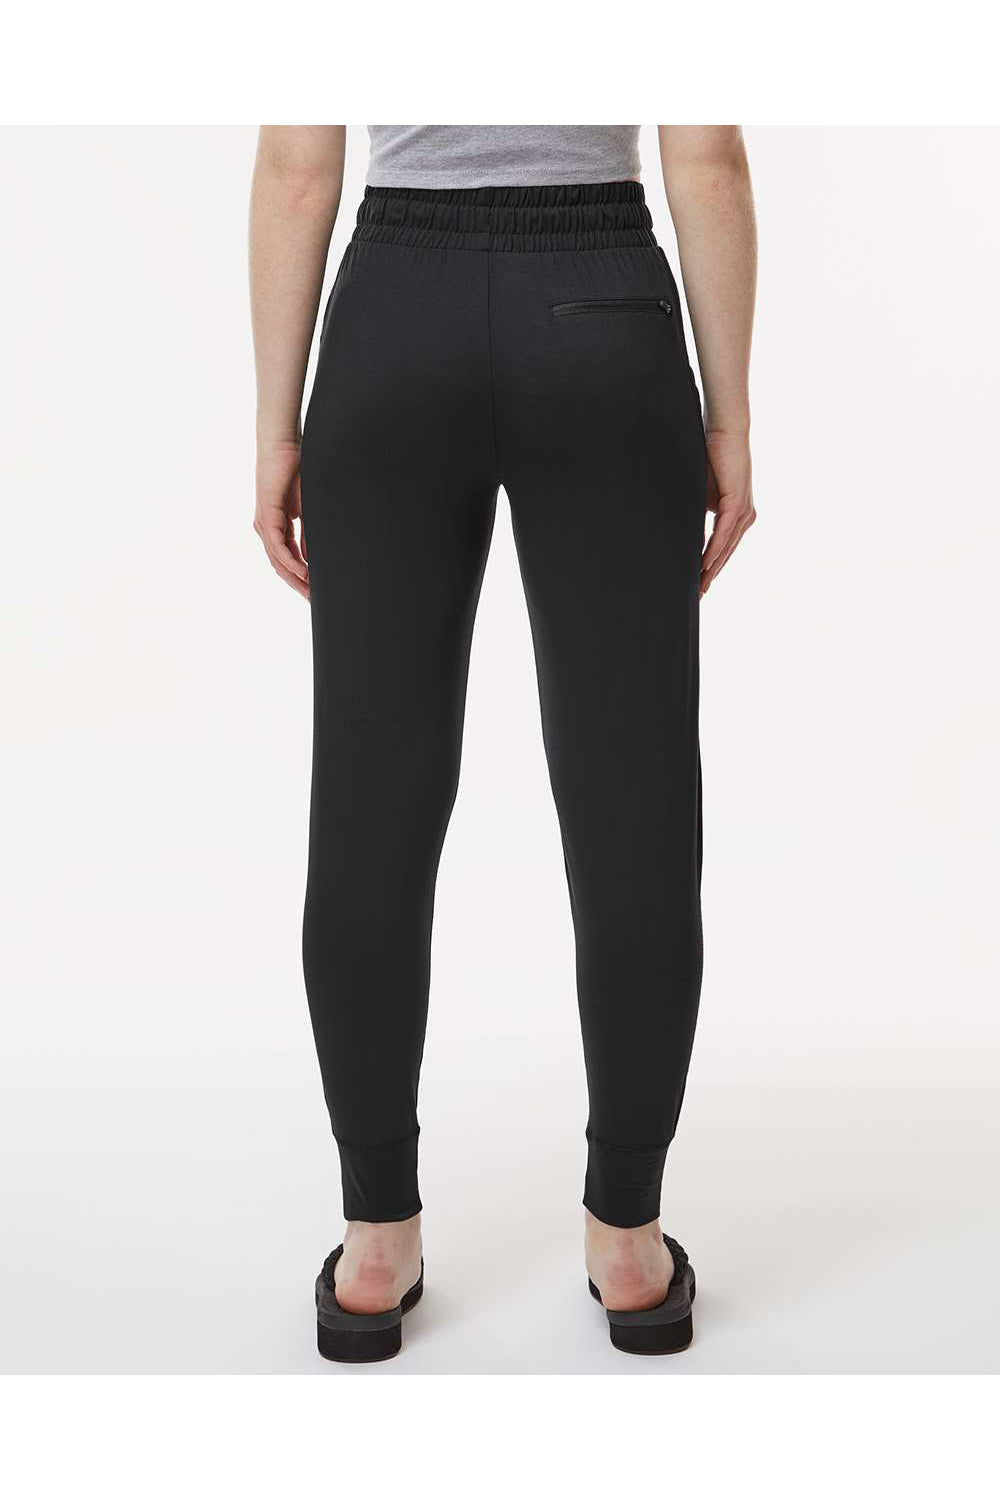 Holloway 222799 Womens Eco Revive Ventura Jogger Sweatpants w/ Pockets Black Model Back